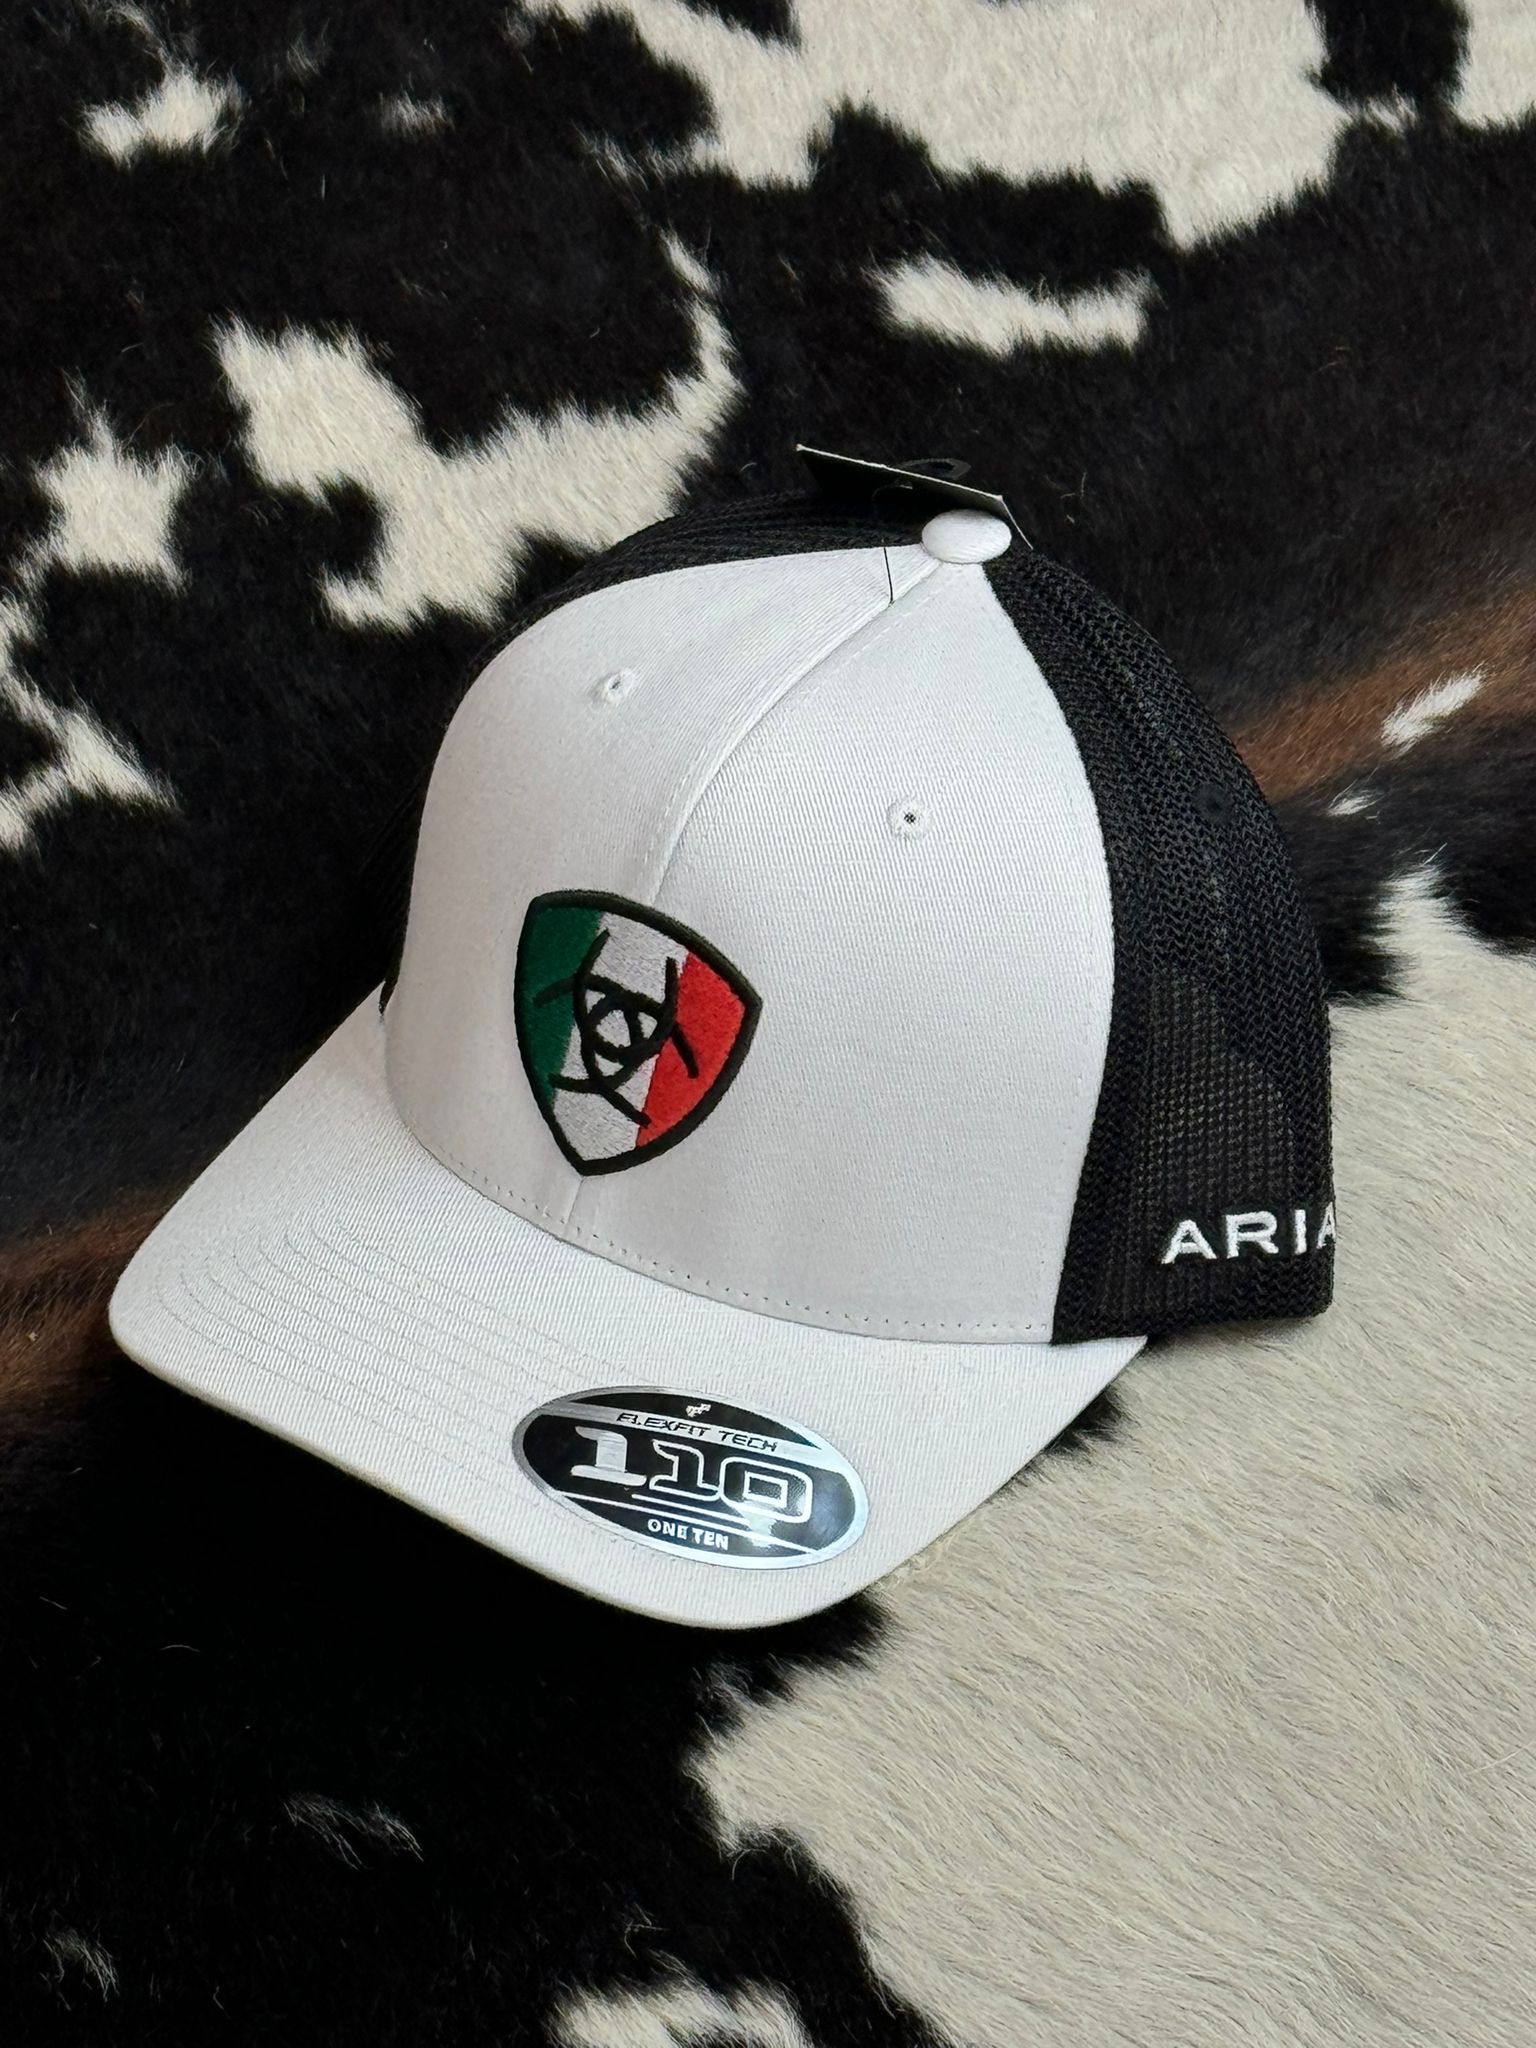 ARIAT MEXICO COLOR LOGO WHITE & BLACK CAP